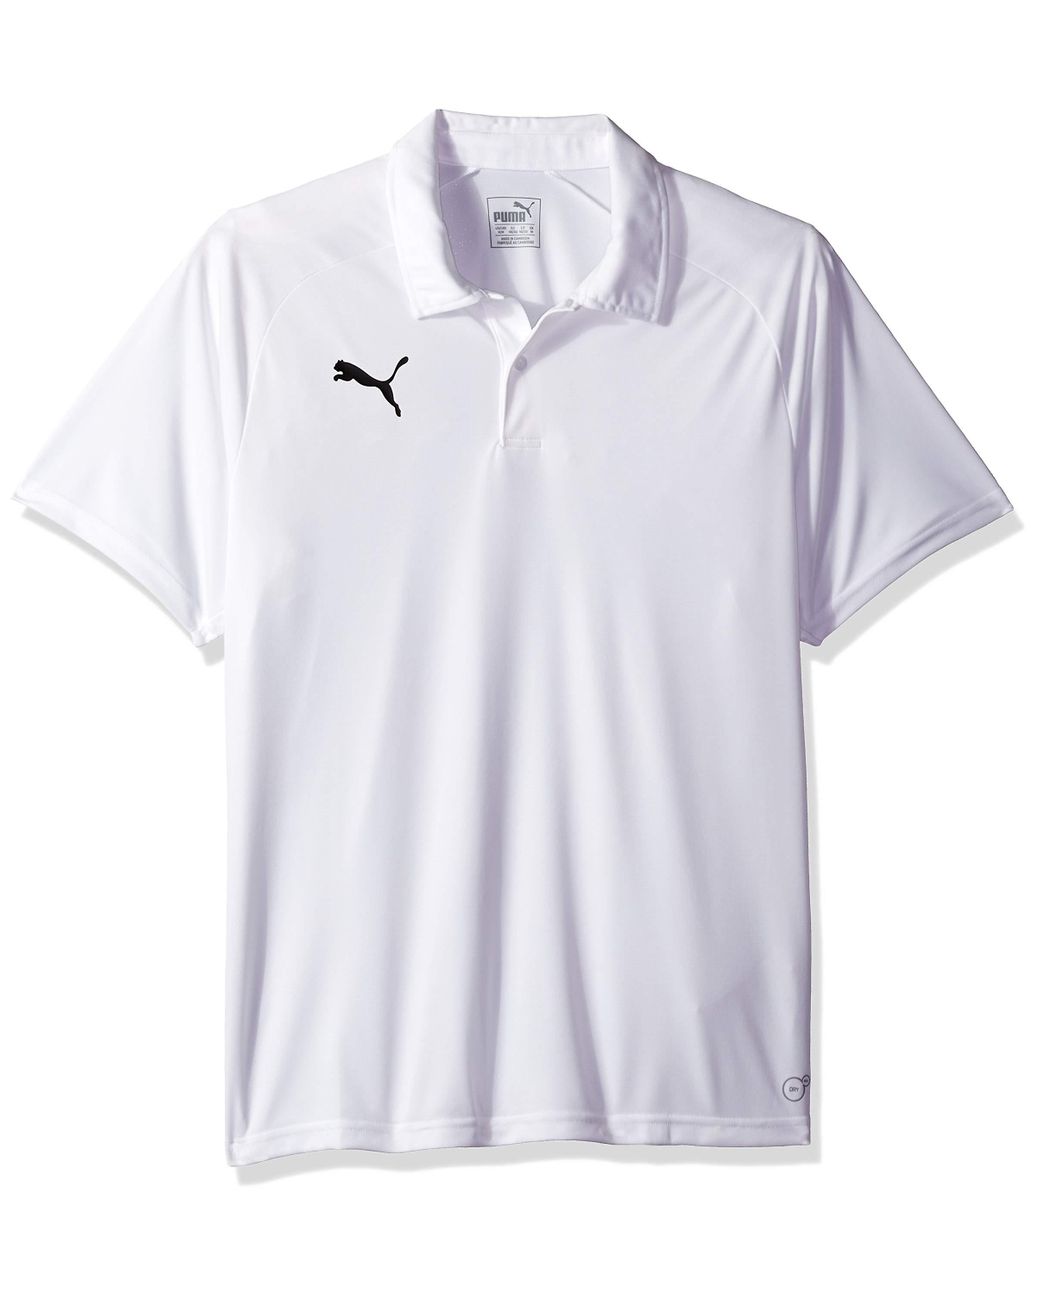 PUMA Liga Sideline Polo in White for Men - Save 20% - Lyst